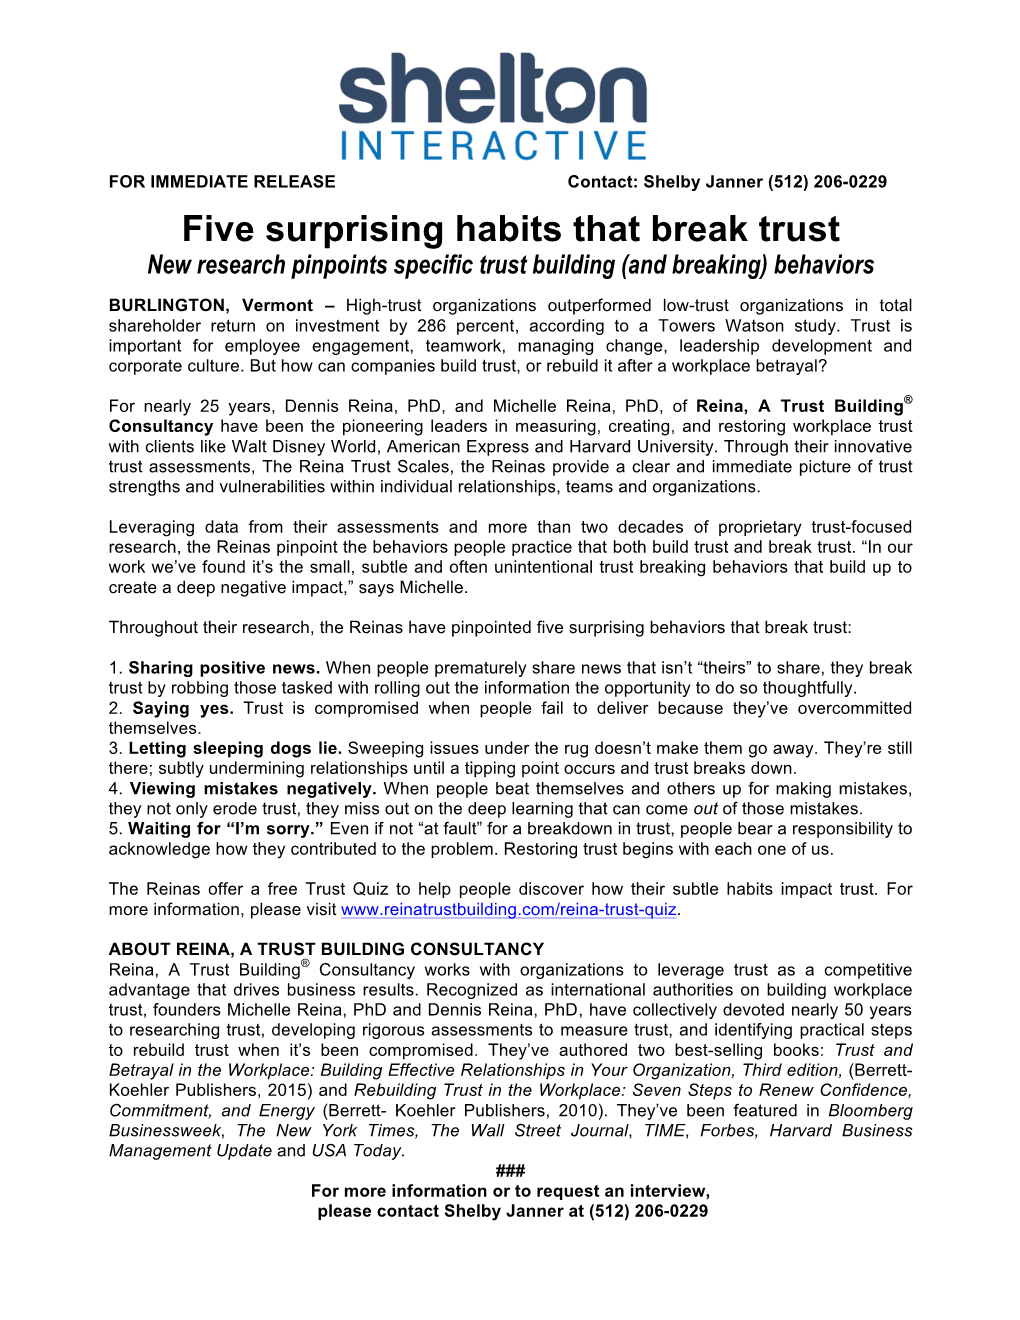 Five Surprising Habits That Break Trust New Research Pinpoints Specific Trust Building (And Breaking) Behaviors